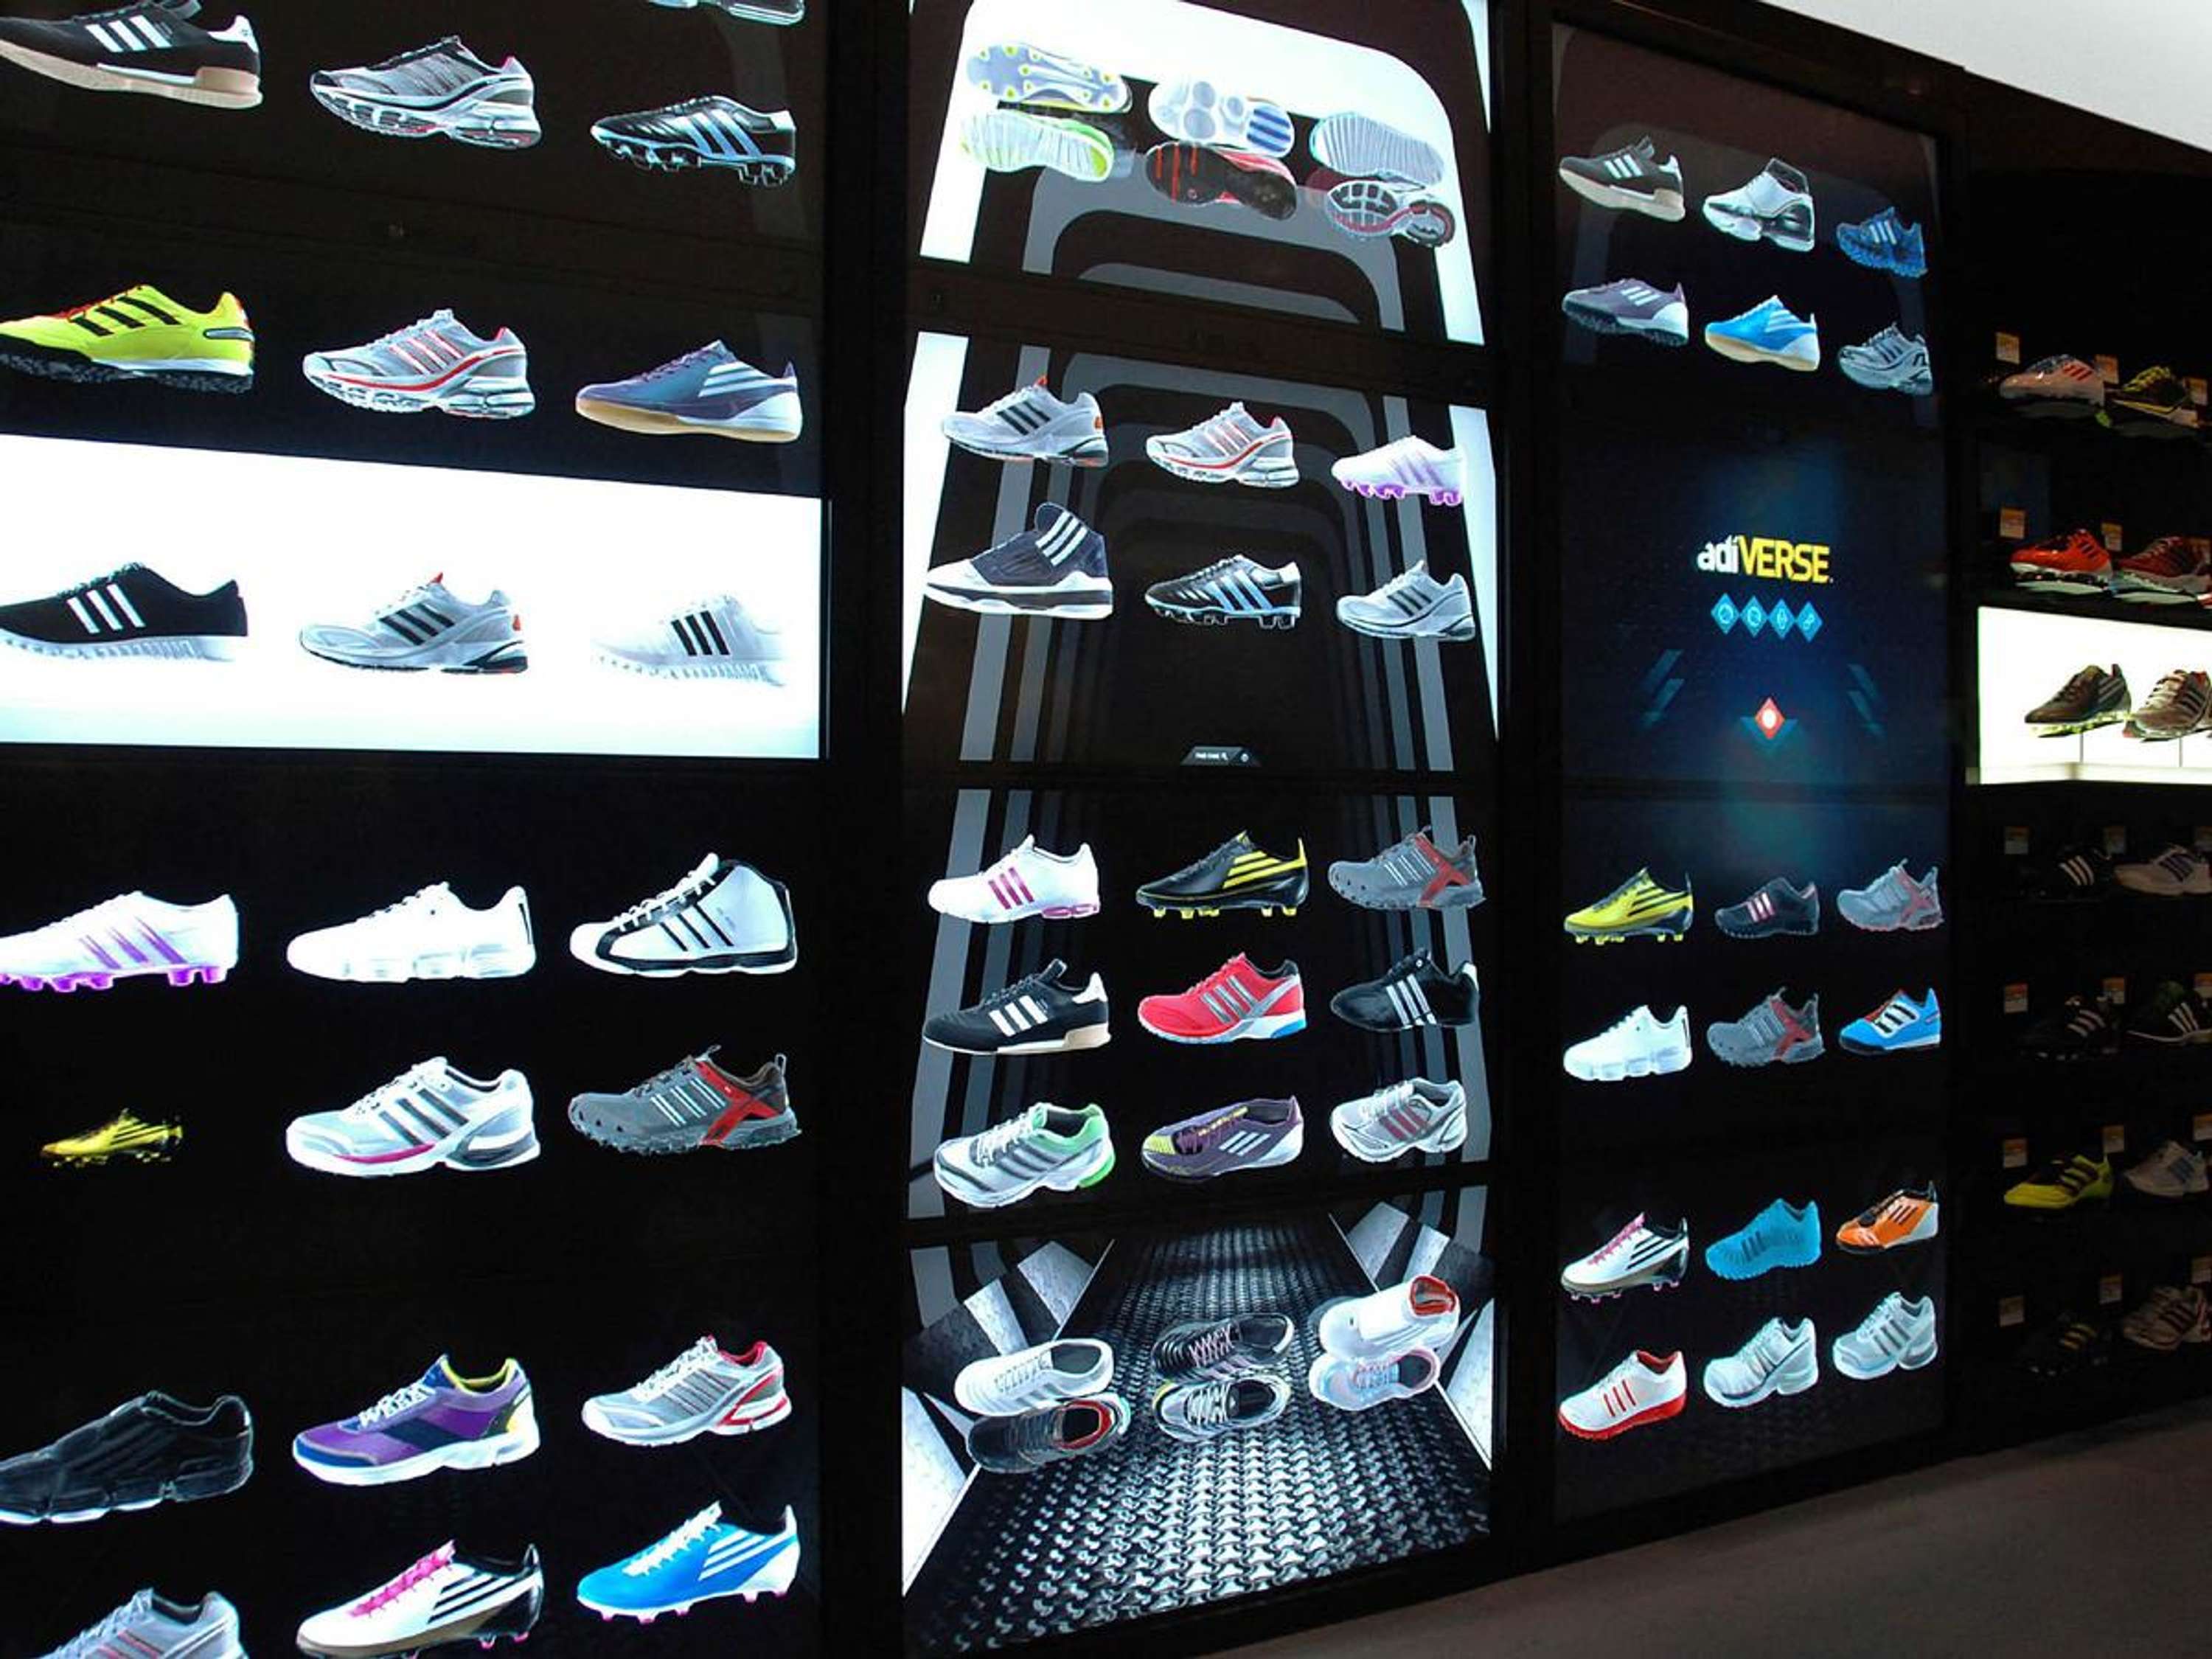 Г обуви спортивной. Nike adidas Magazin. Adidas 2021 витрина. Витрина спортивного магазина адидас. Коллекция кроссовок.